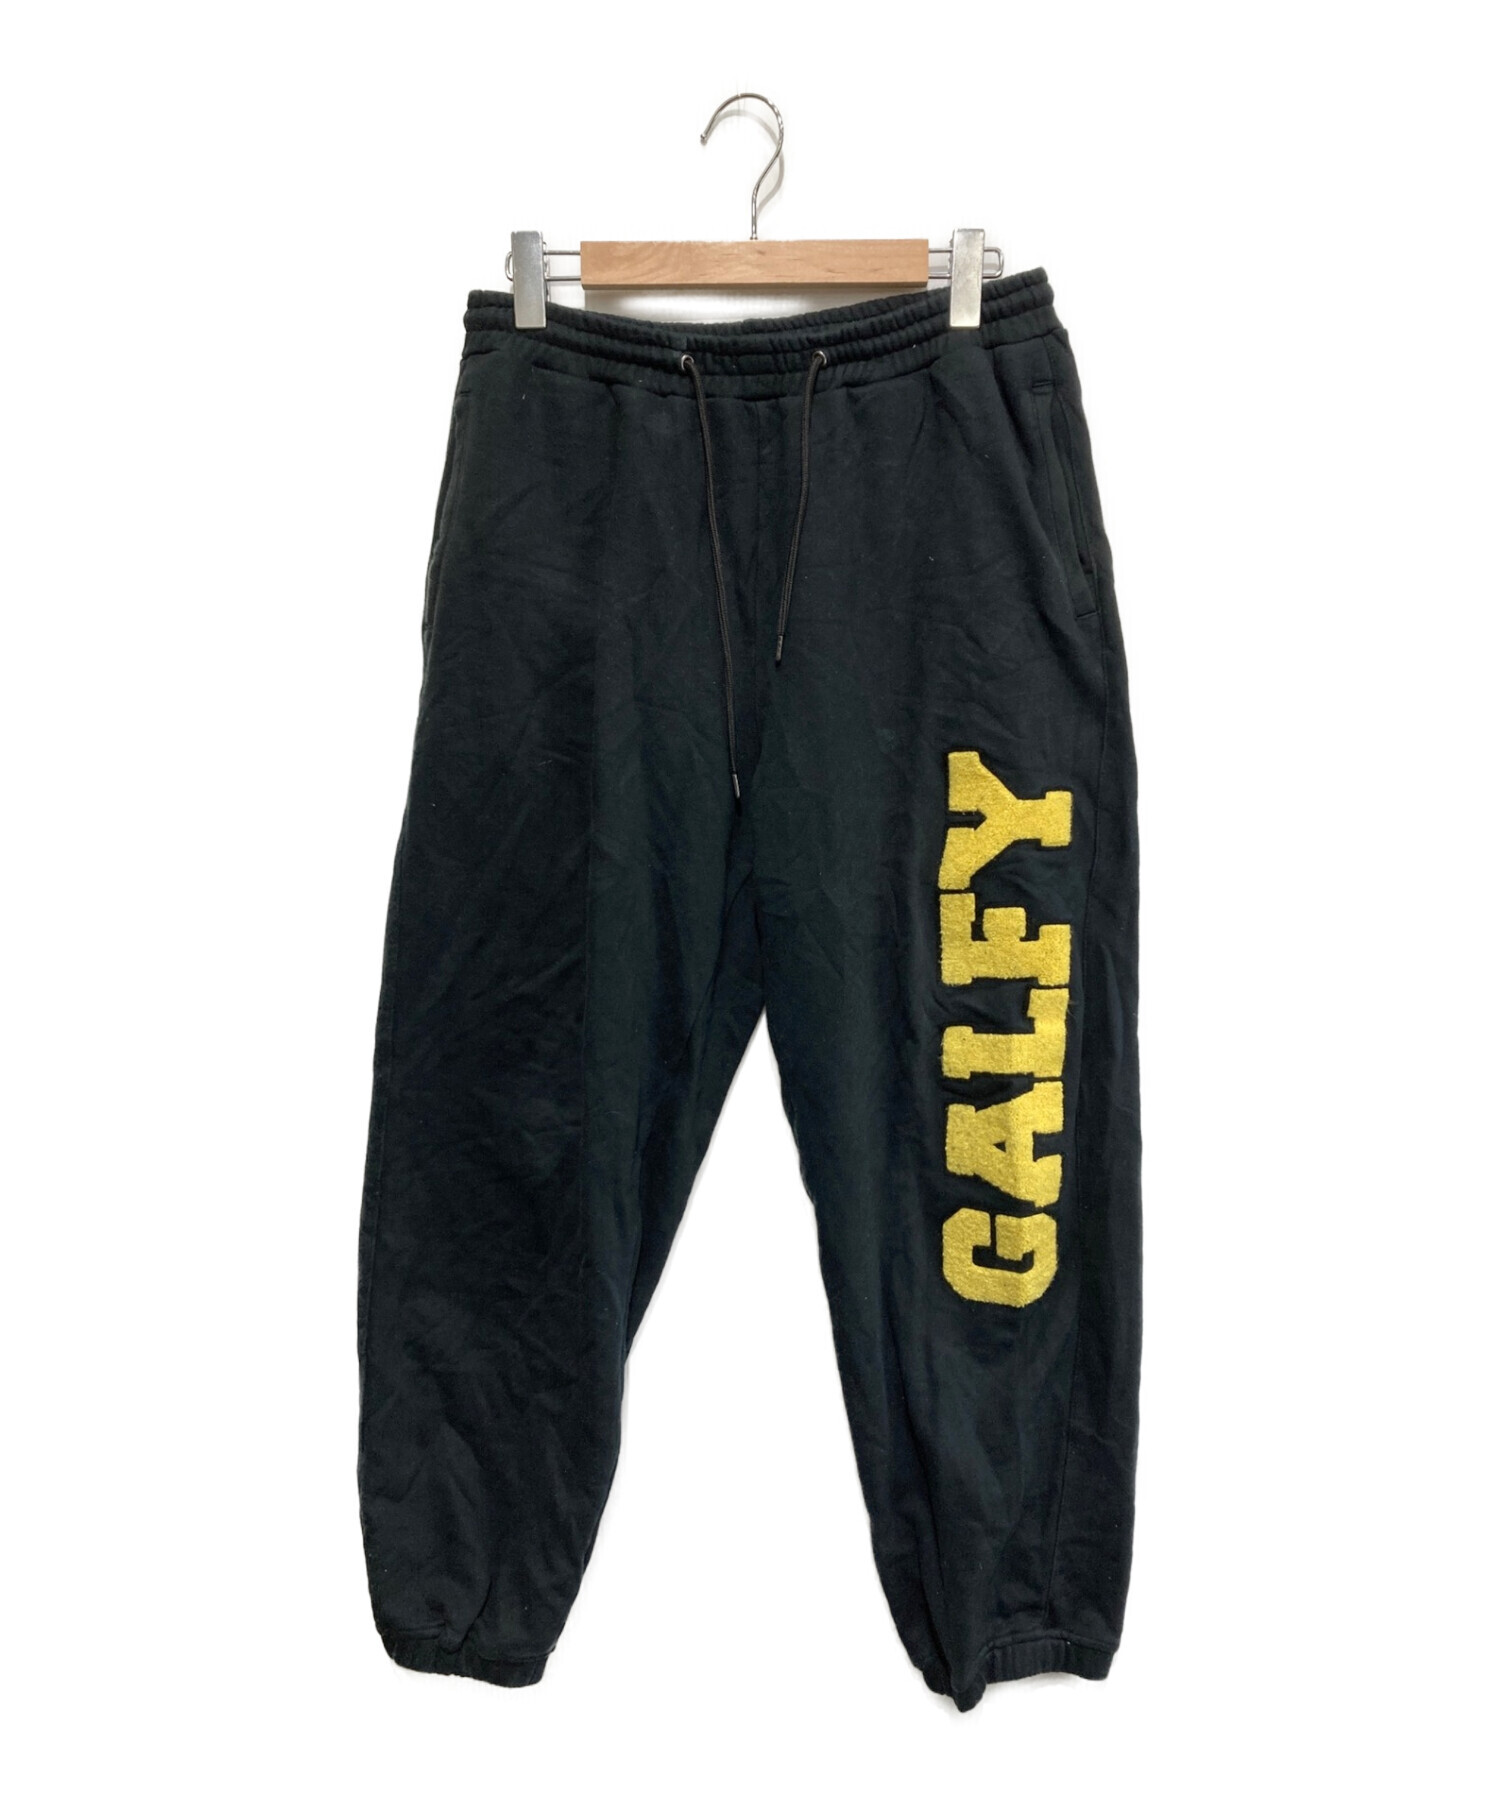 GALFY (ガルフィー) セットアップスウェット ブラック サイズ:SIZE XL